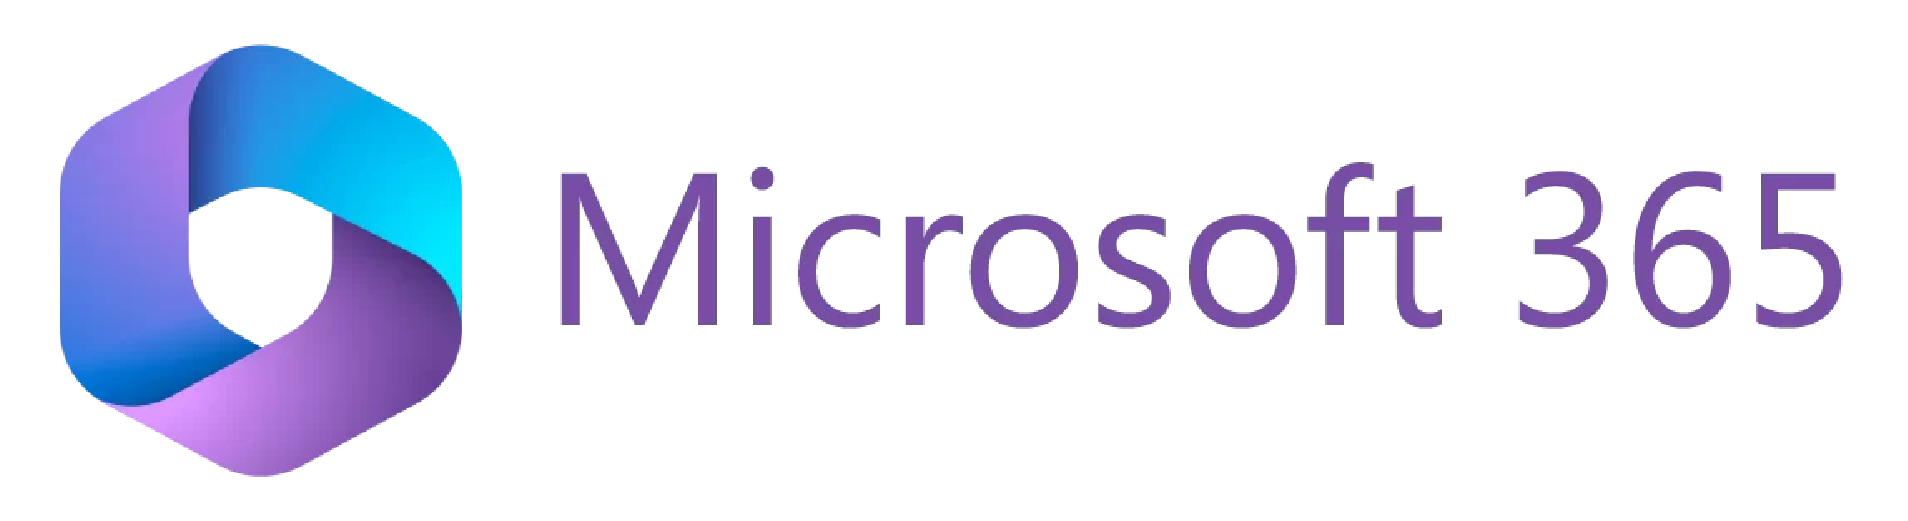 Microsoft 365 Partner logos-04-04